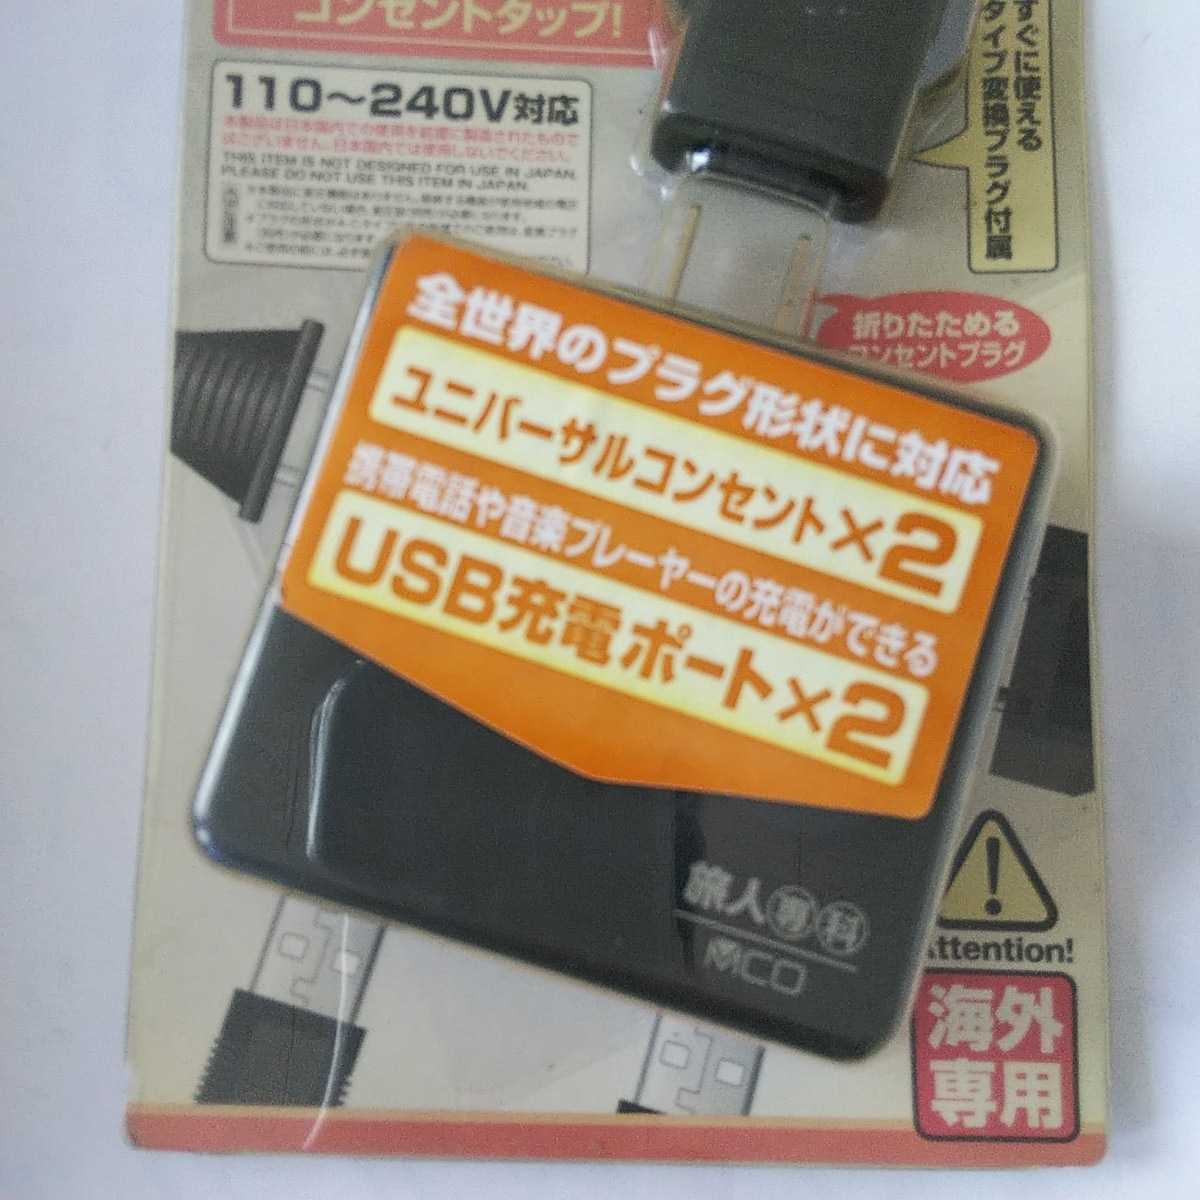 MCO AC-USBモバイルタップ USB充電対応 海外旅行/出張に USB 2ポート MBP-U2P/BK ブラック_画像3